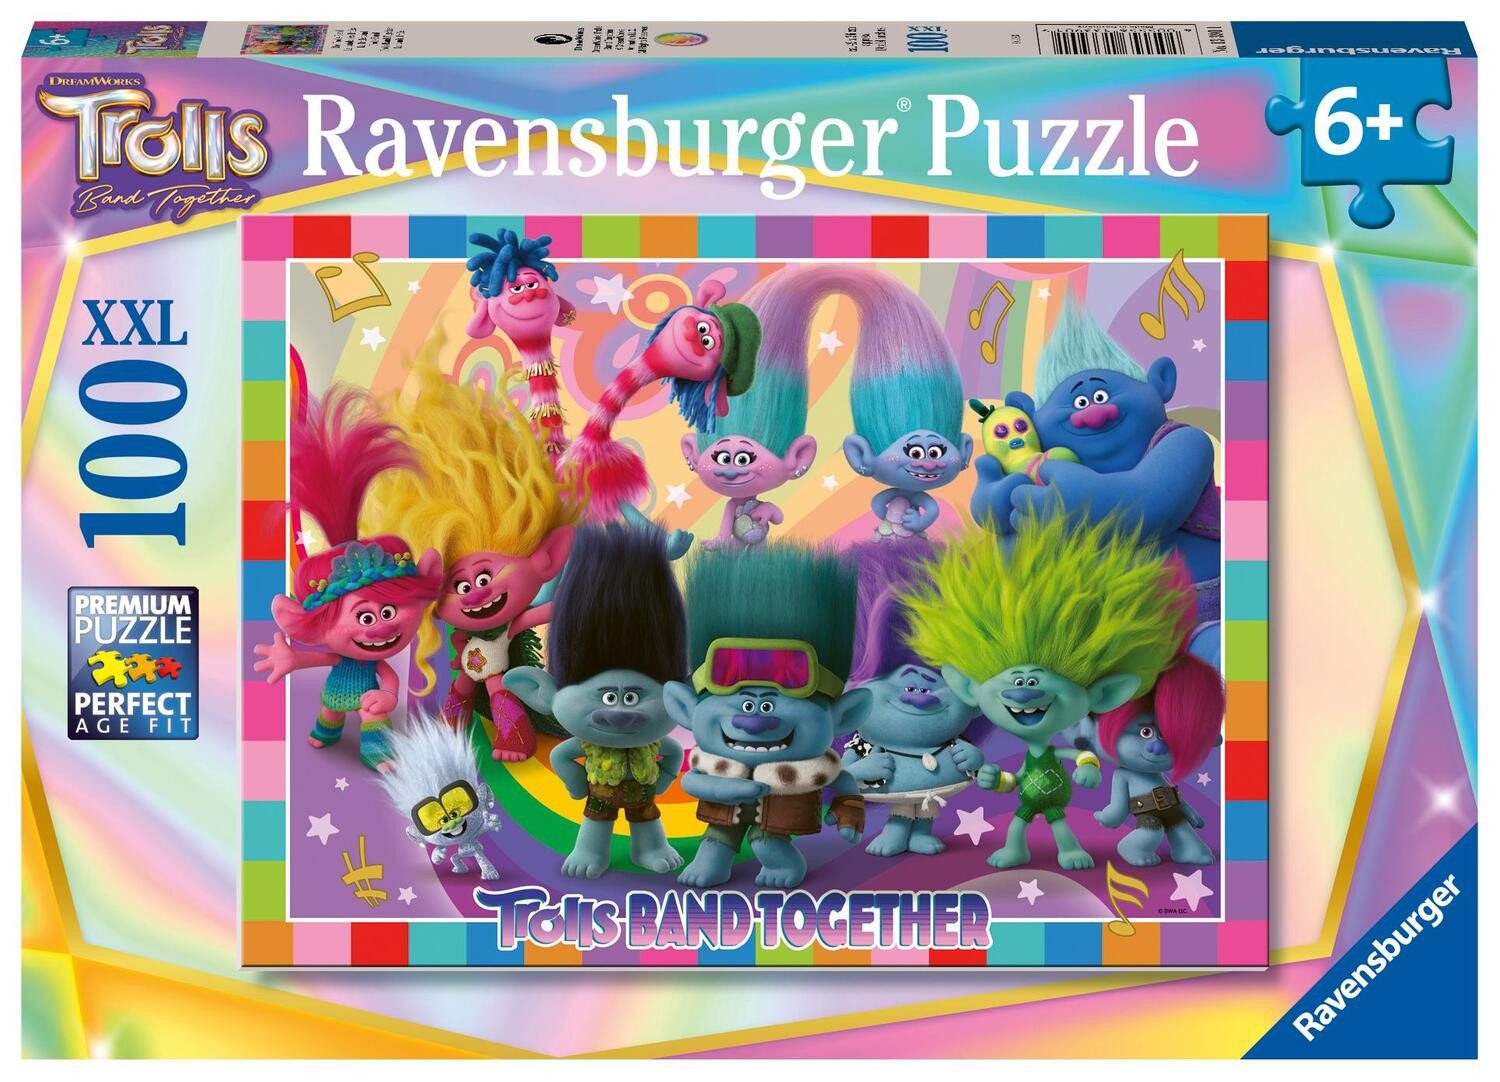 Ravensburger Puzzle Ravensburger Kinderpuzzle 13390 - Trolls 3 - 100 Teile XXL Trolls..., 100 Puzzleteile